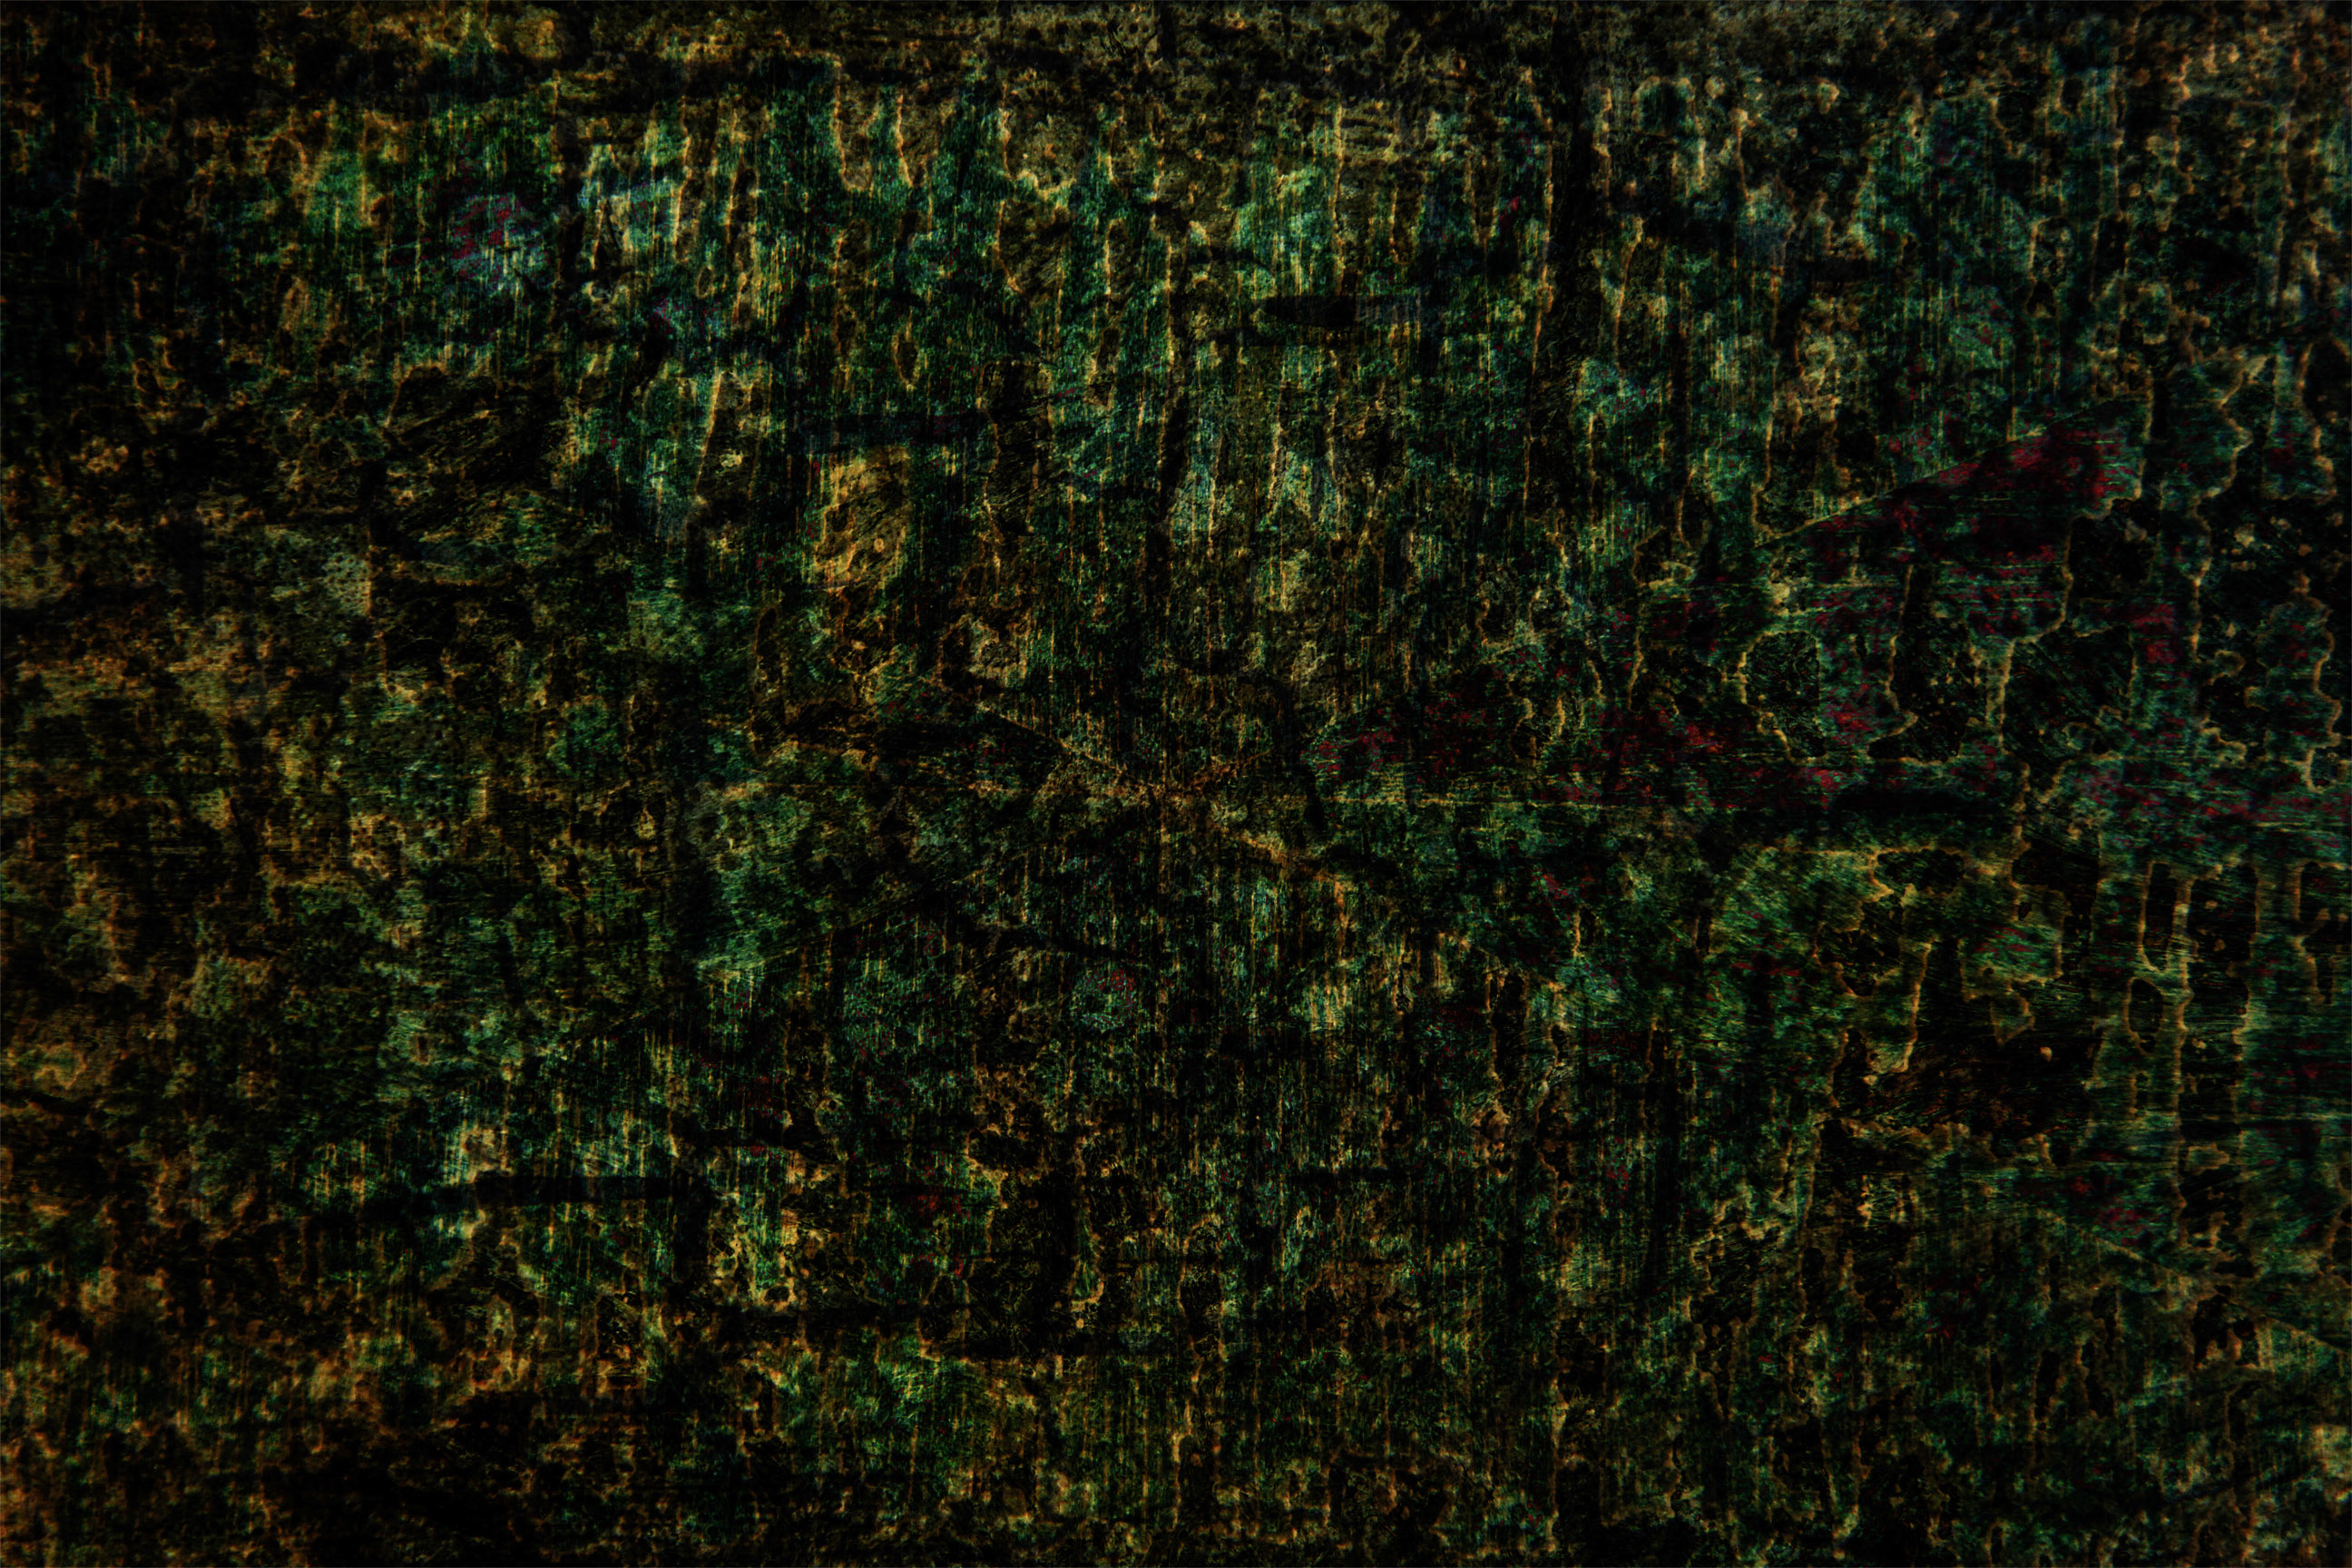 Dark Green Grunge Wallpapers